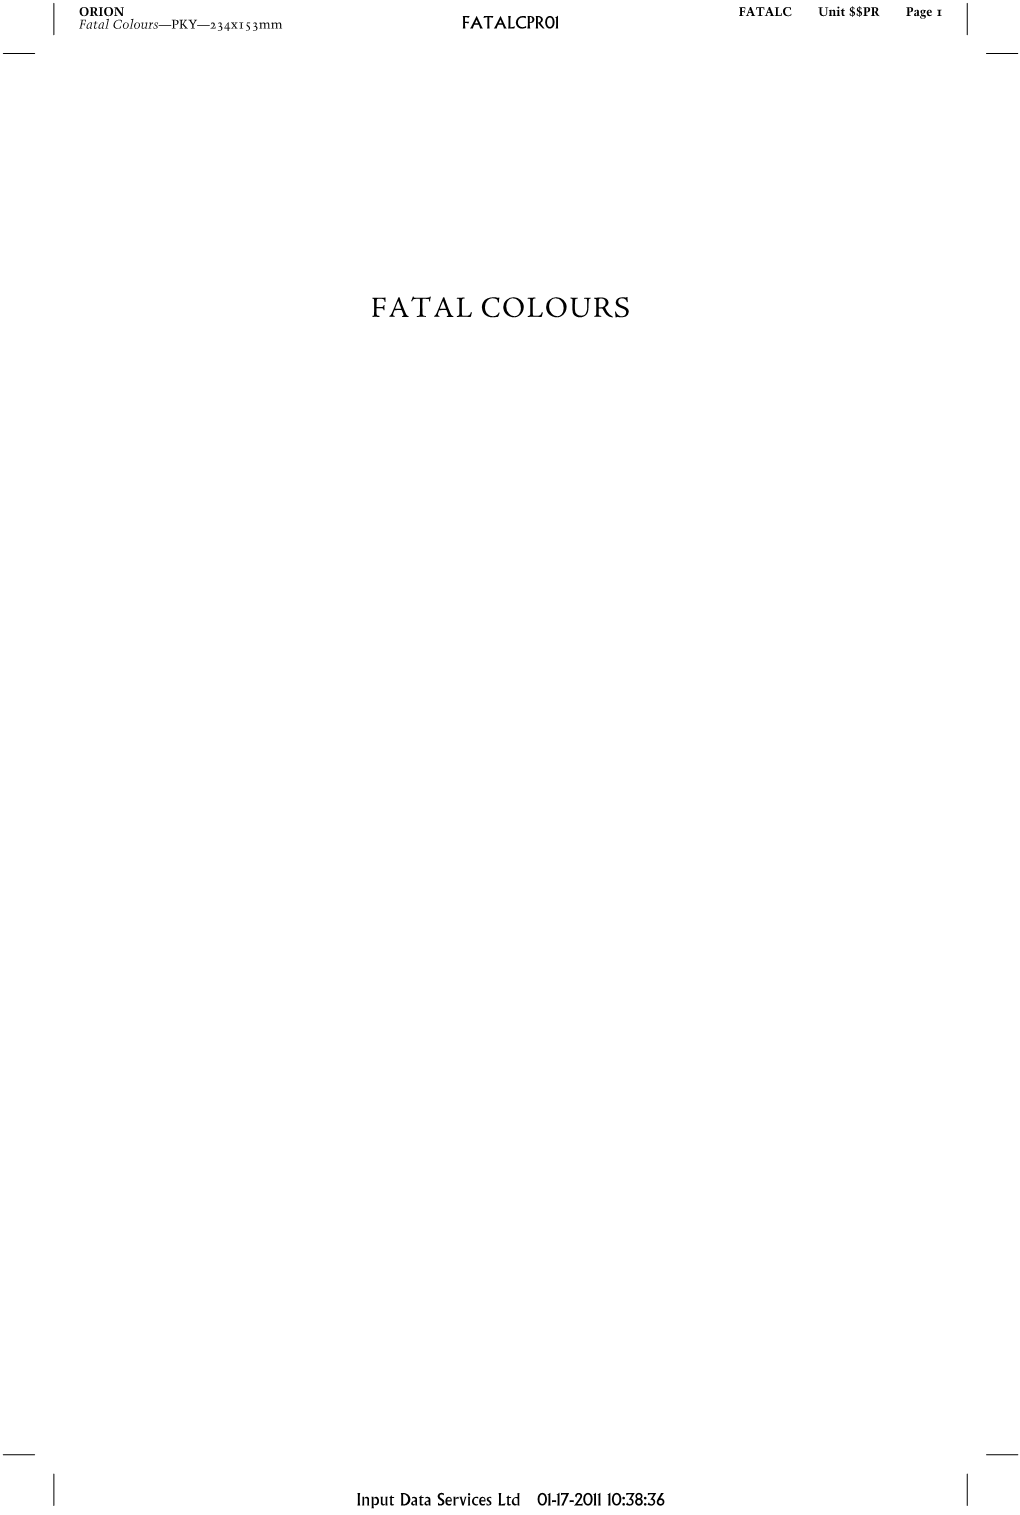 Fatal Colours—PKY—234X153mm FATALCPR01